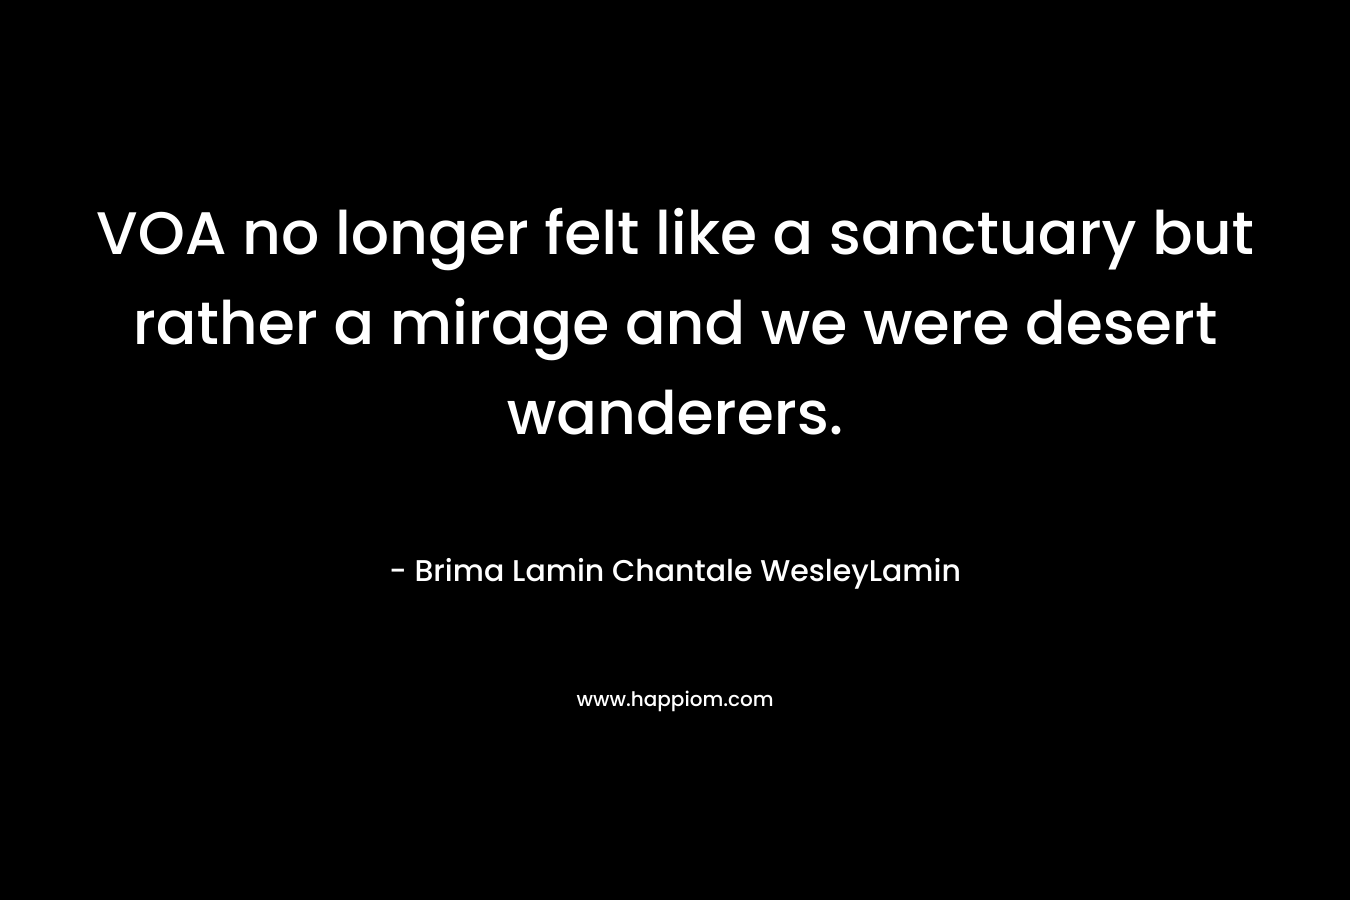 VOA no longer felt like a sanctuary but rather a mirage and we were desert wanderers.